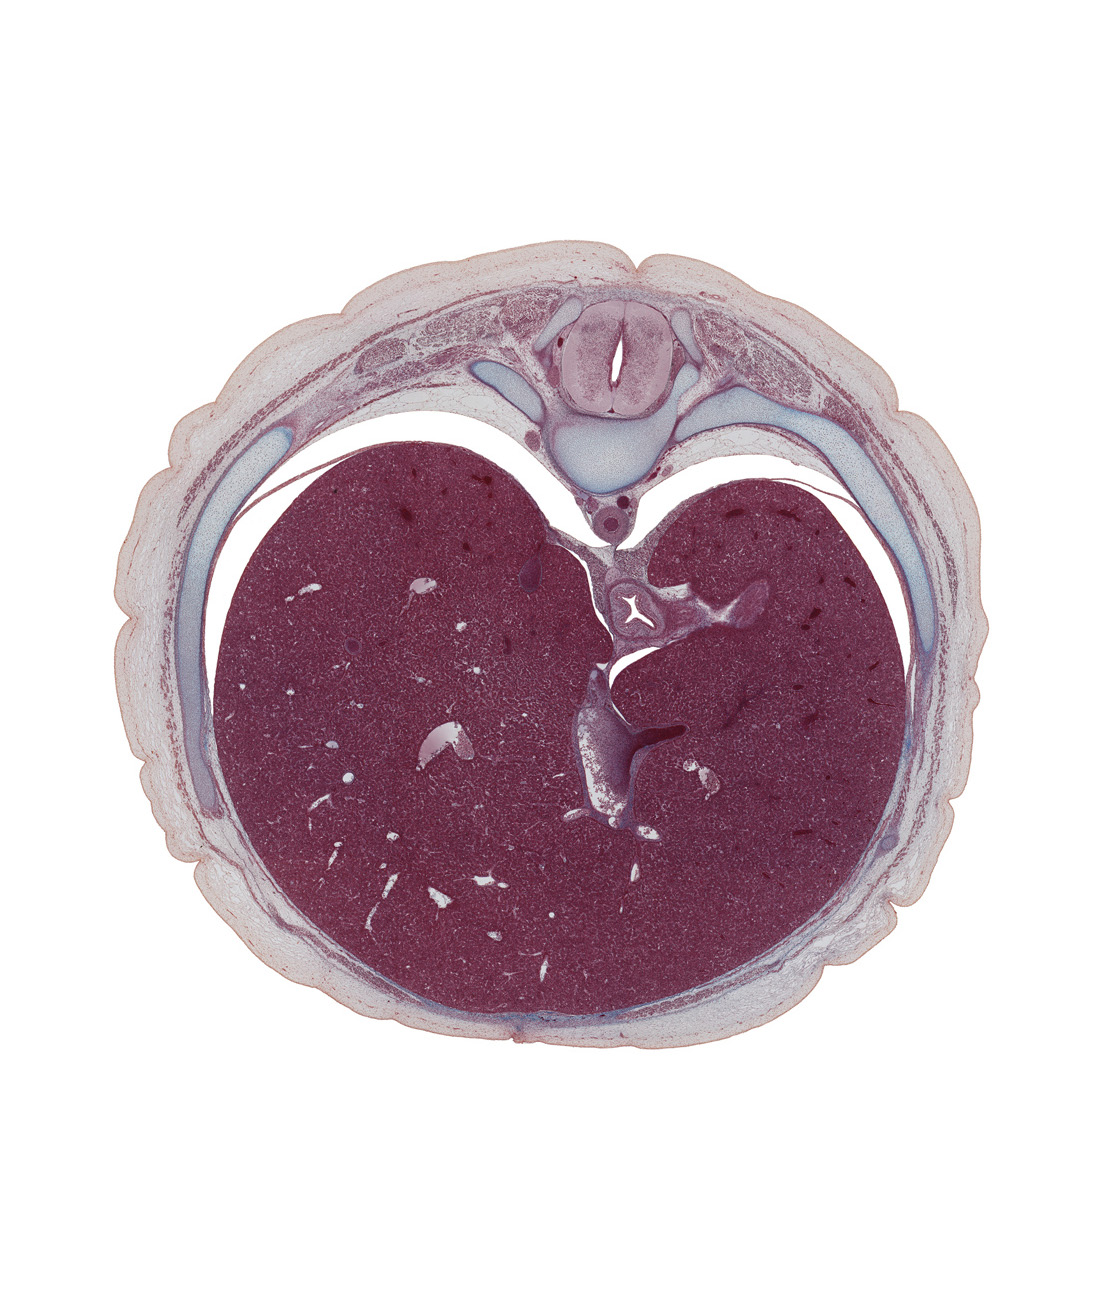 T-9 / T-10 interganglion region, abdominal part of esophagus, anterior rectus sheath, anterior spinal artery, aorta, branch of hepatic portal vein, cardiac notch region, diaphragm, dorsal median septum, ductus venosus, greater splanchnic nerve, iliocostalis muscle, inferior hemi-azygos vein, inferior vena cava, left lobe of liver, lesser omentum, longissimus muscle, rib 10, right lobe of liver, subcutaneous tissue, surface ectoderm, sympathetic trunk, transversospinalis muscle